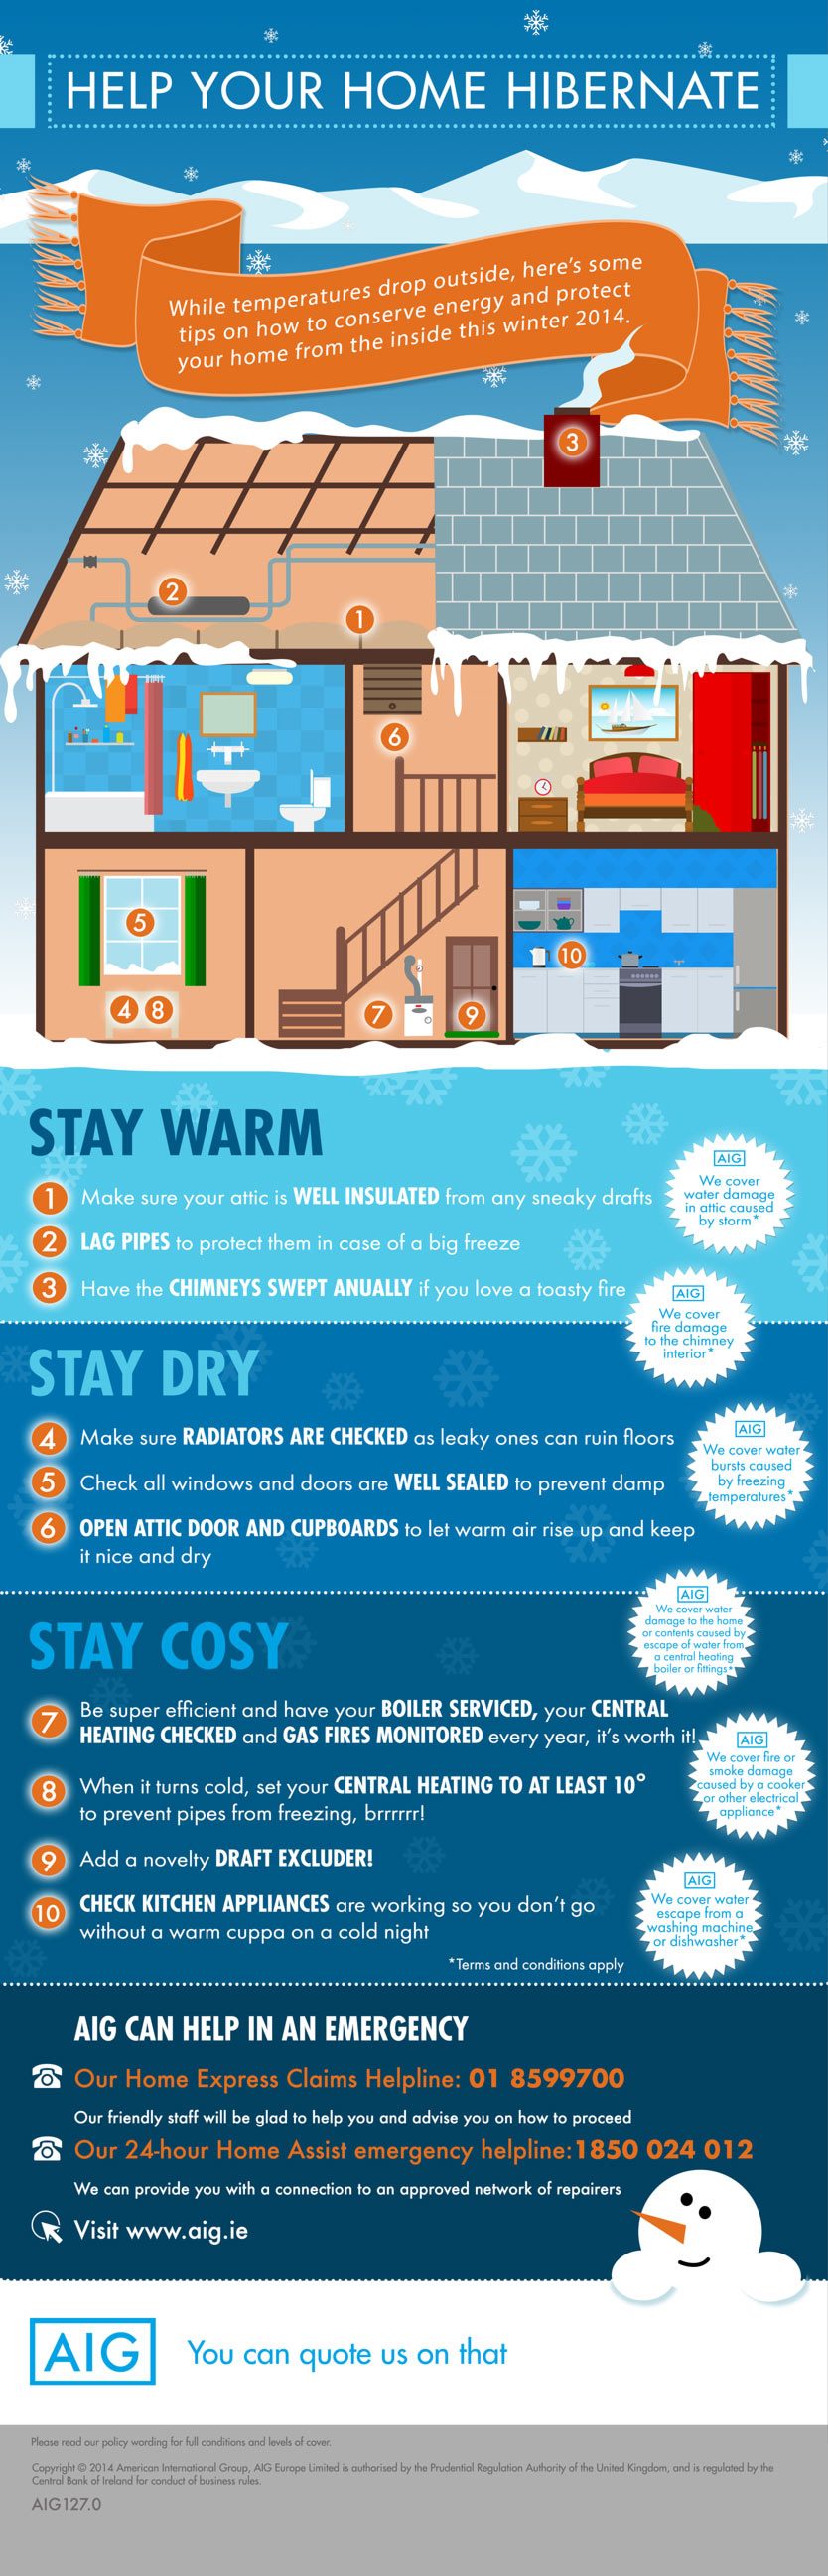 Hibernate your home this winter